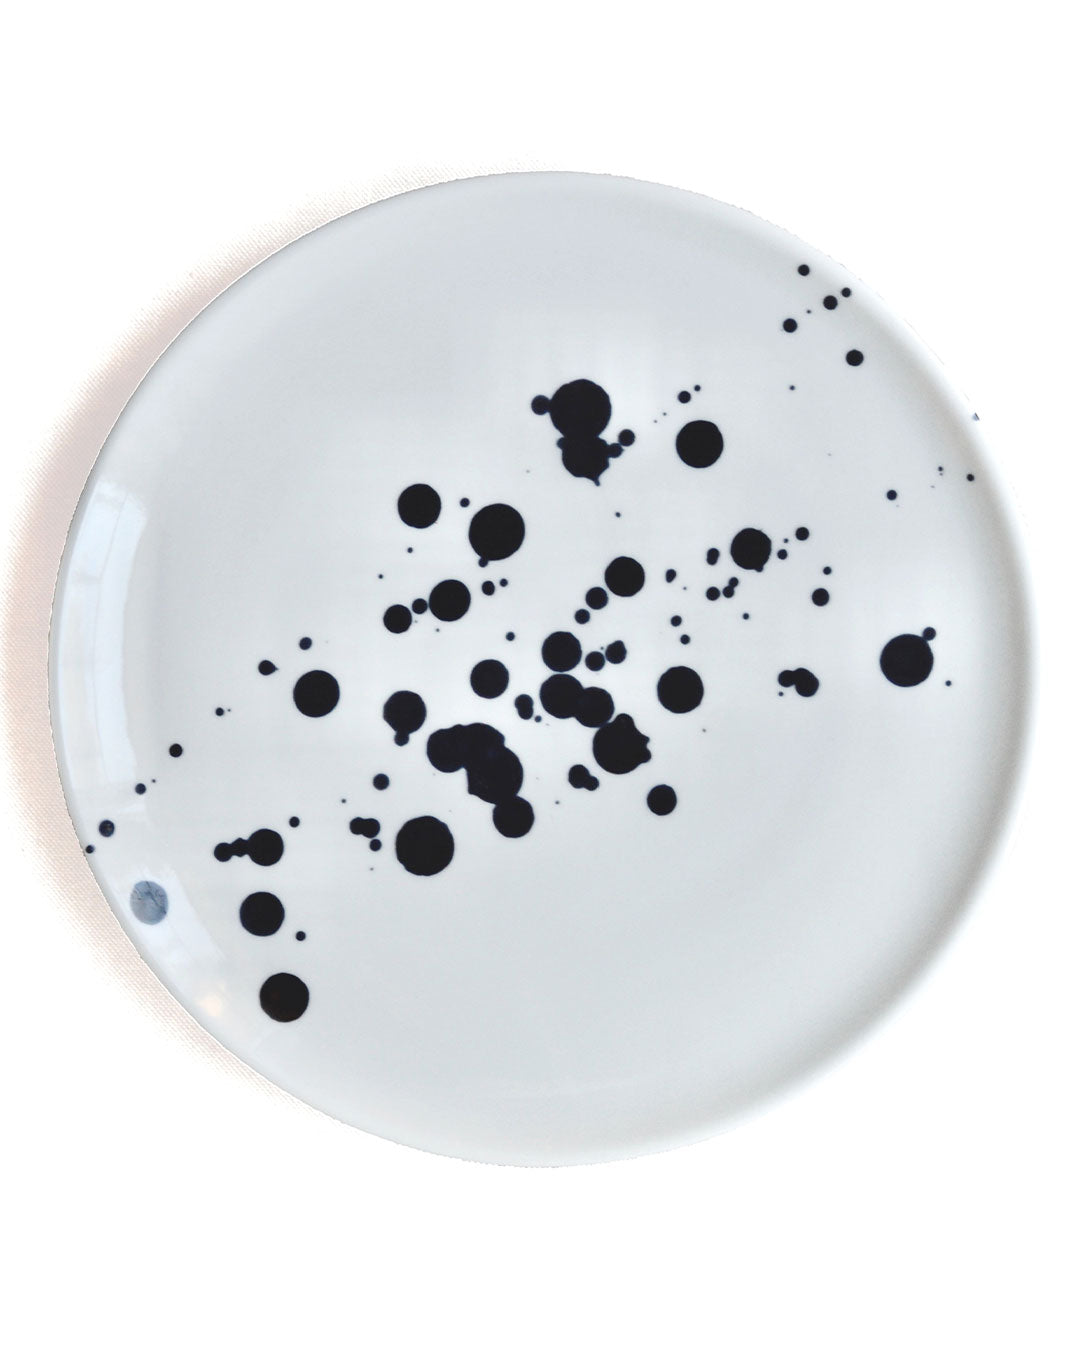 Sumi-e Ink blot porcelain plates tableware Maia Ming Designs